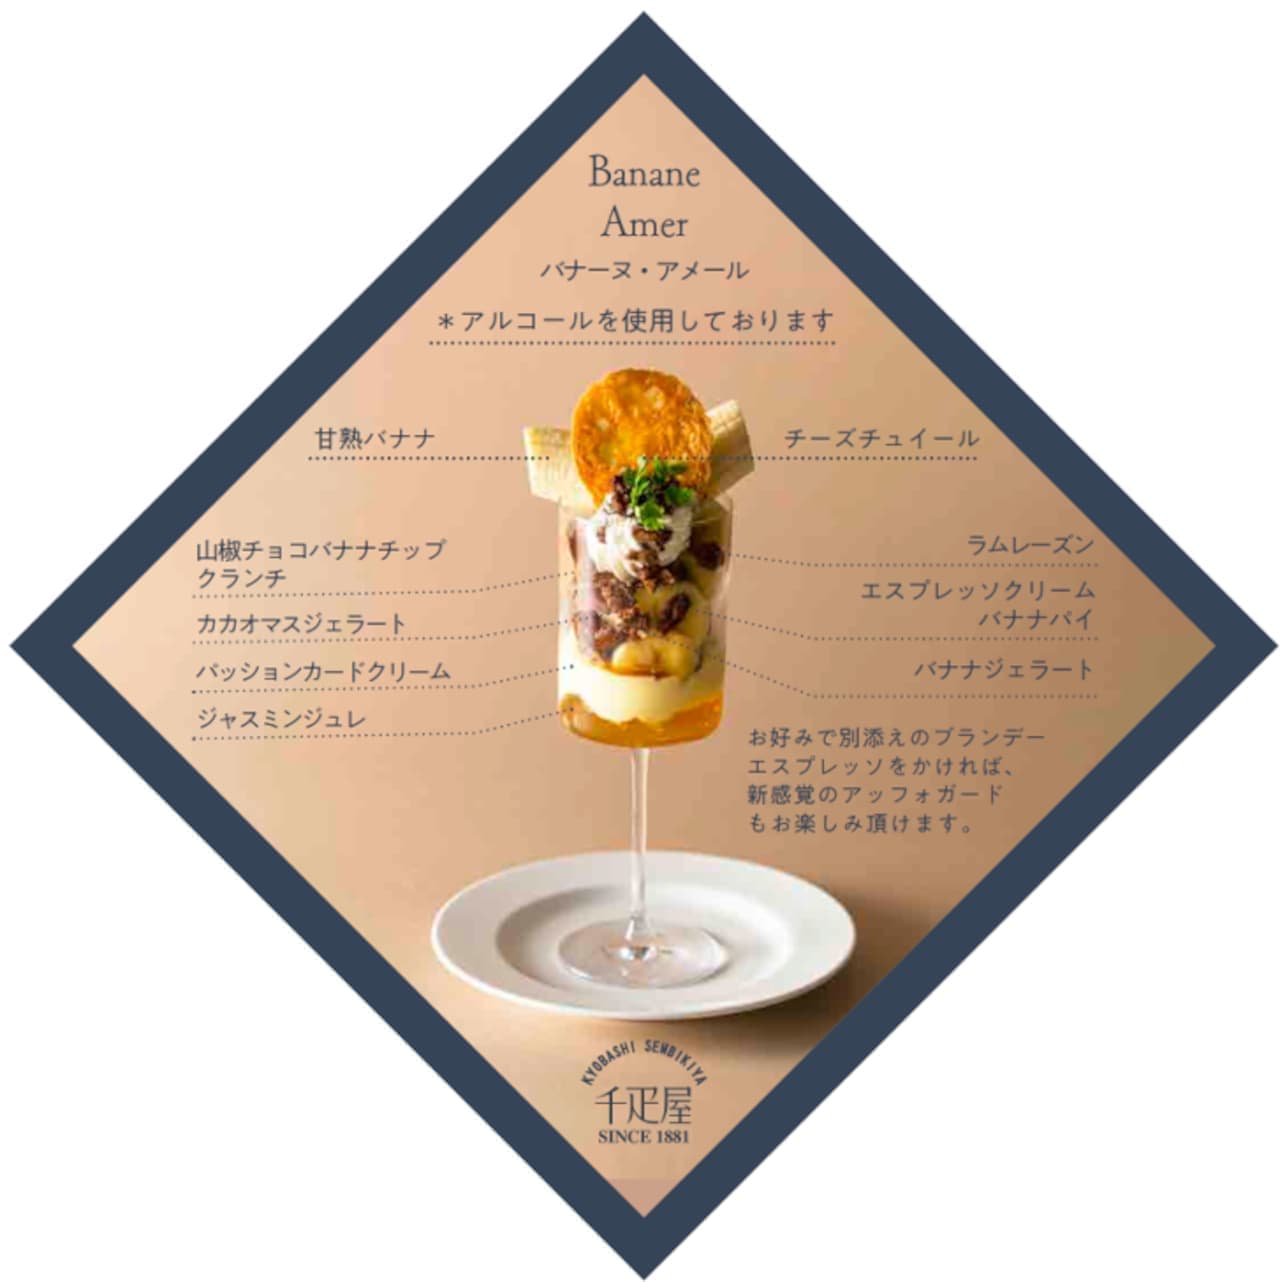 Kyobashi Senbiya "Night Limited Parfait" is now available! "Banane Amer" "Mango Pina Colada"